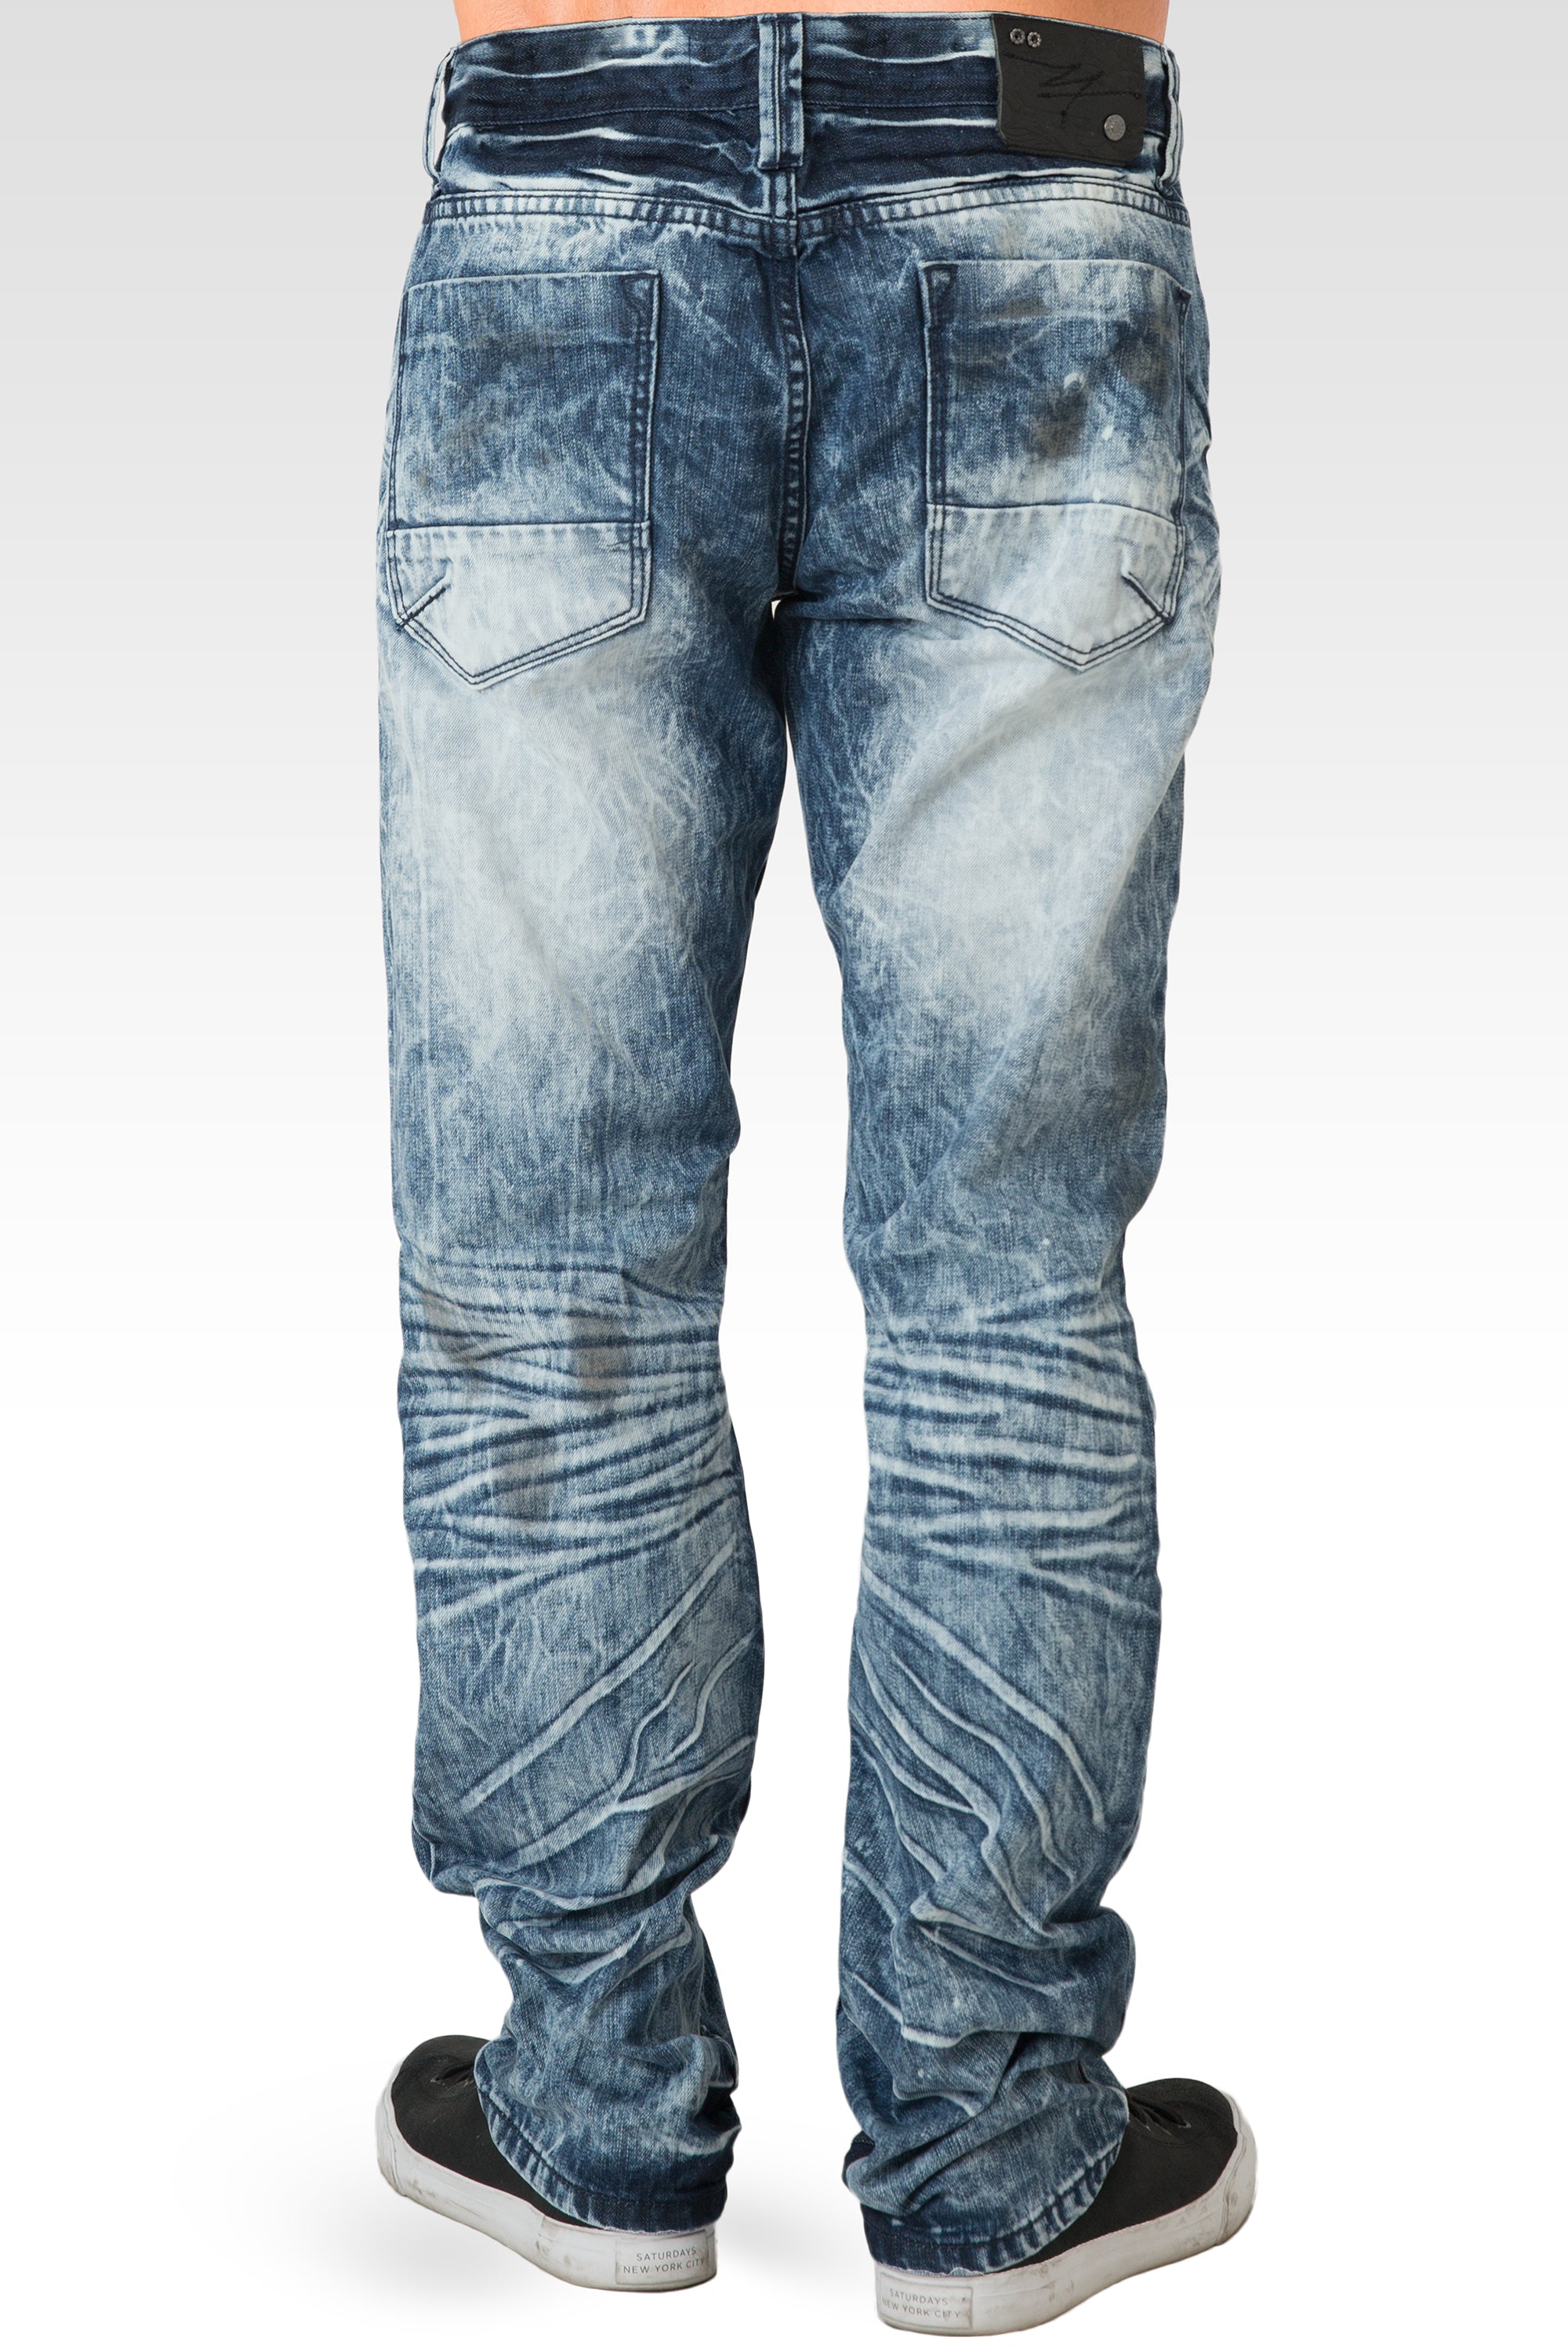 Jeans for Older Men That Don't Feel Dated | 34 Heritage Blog